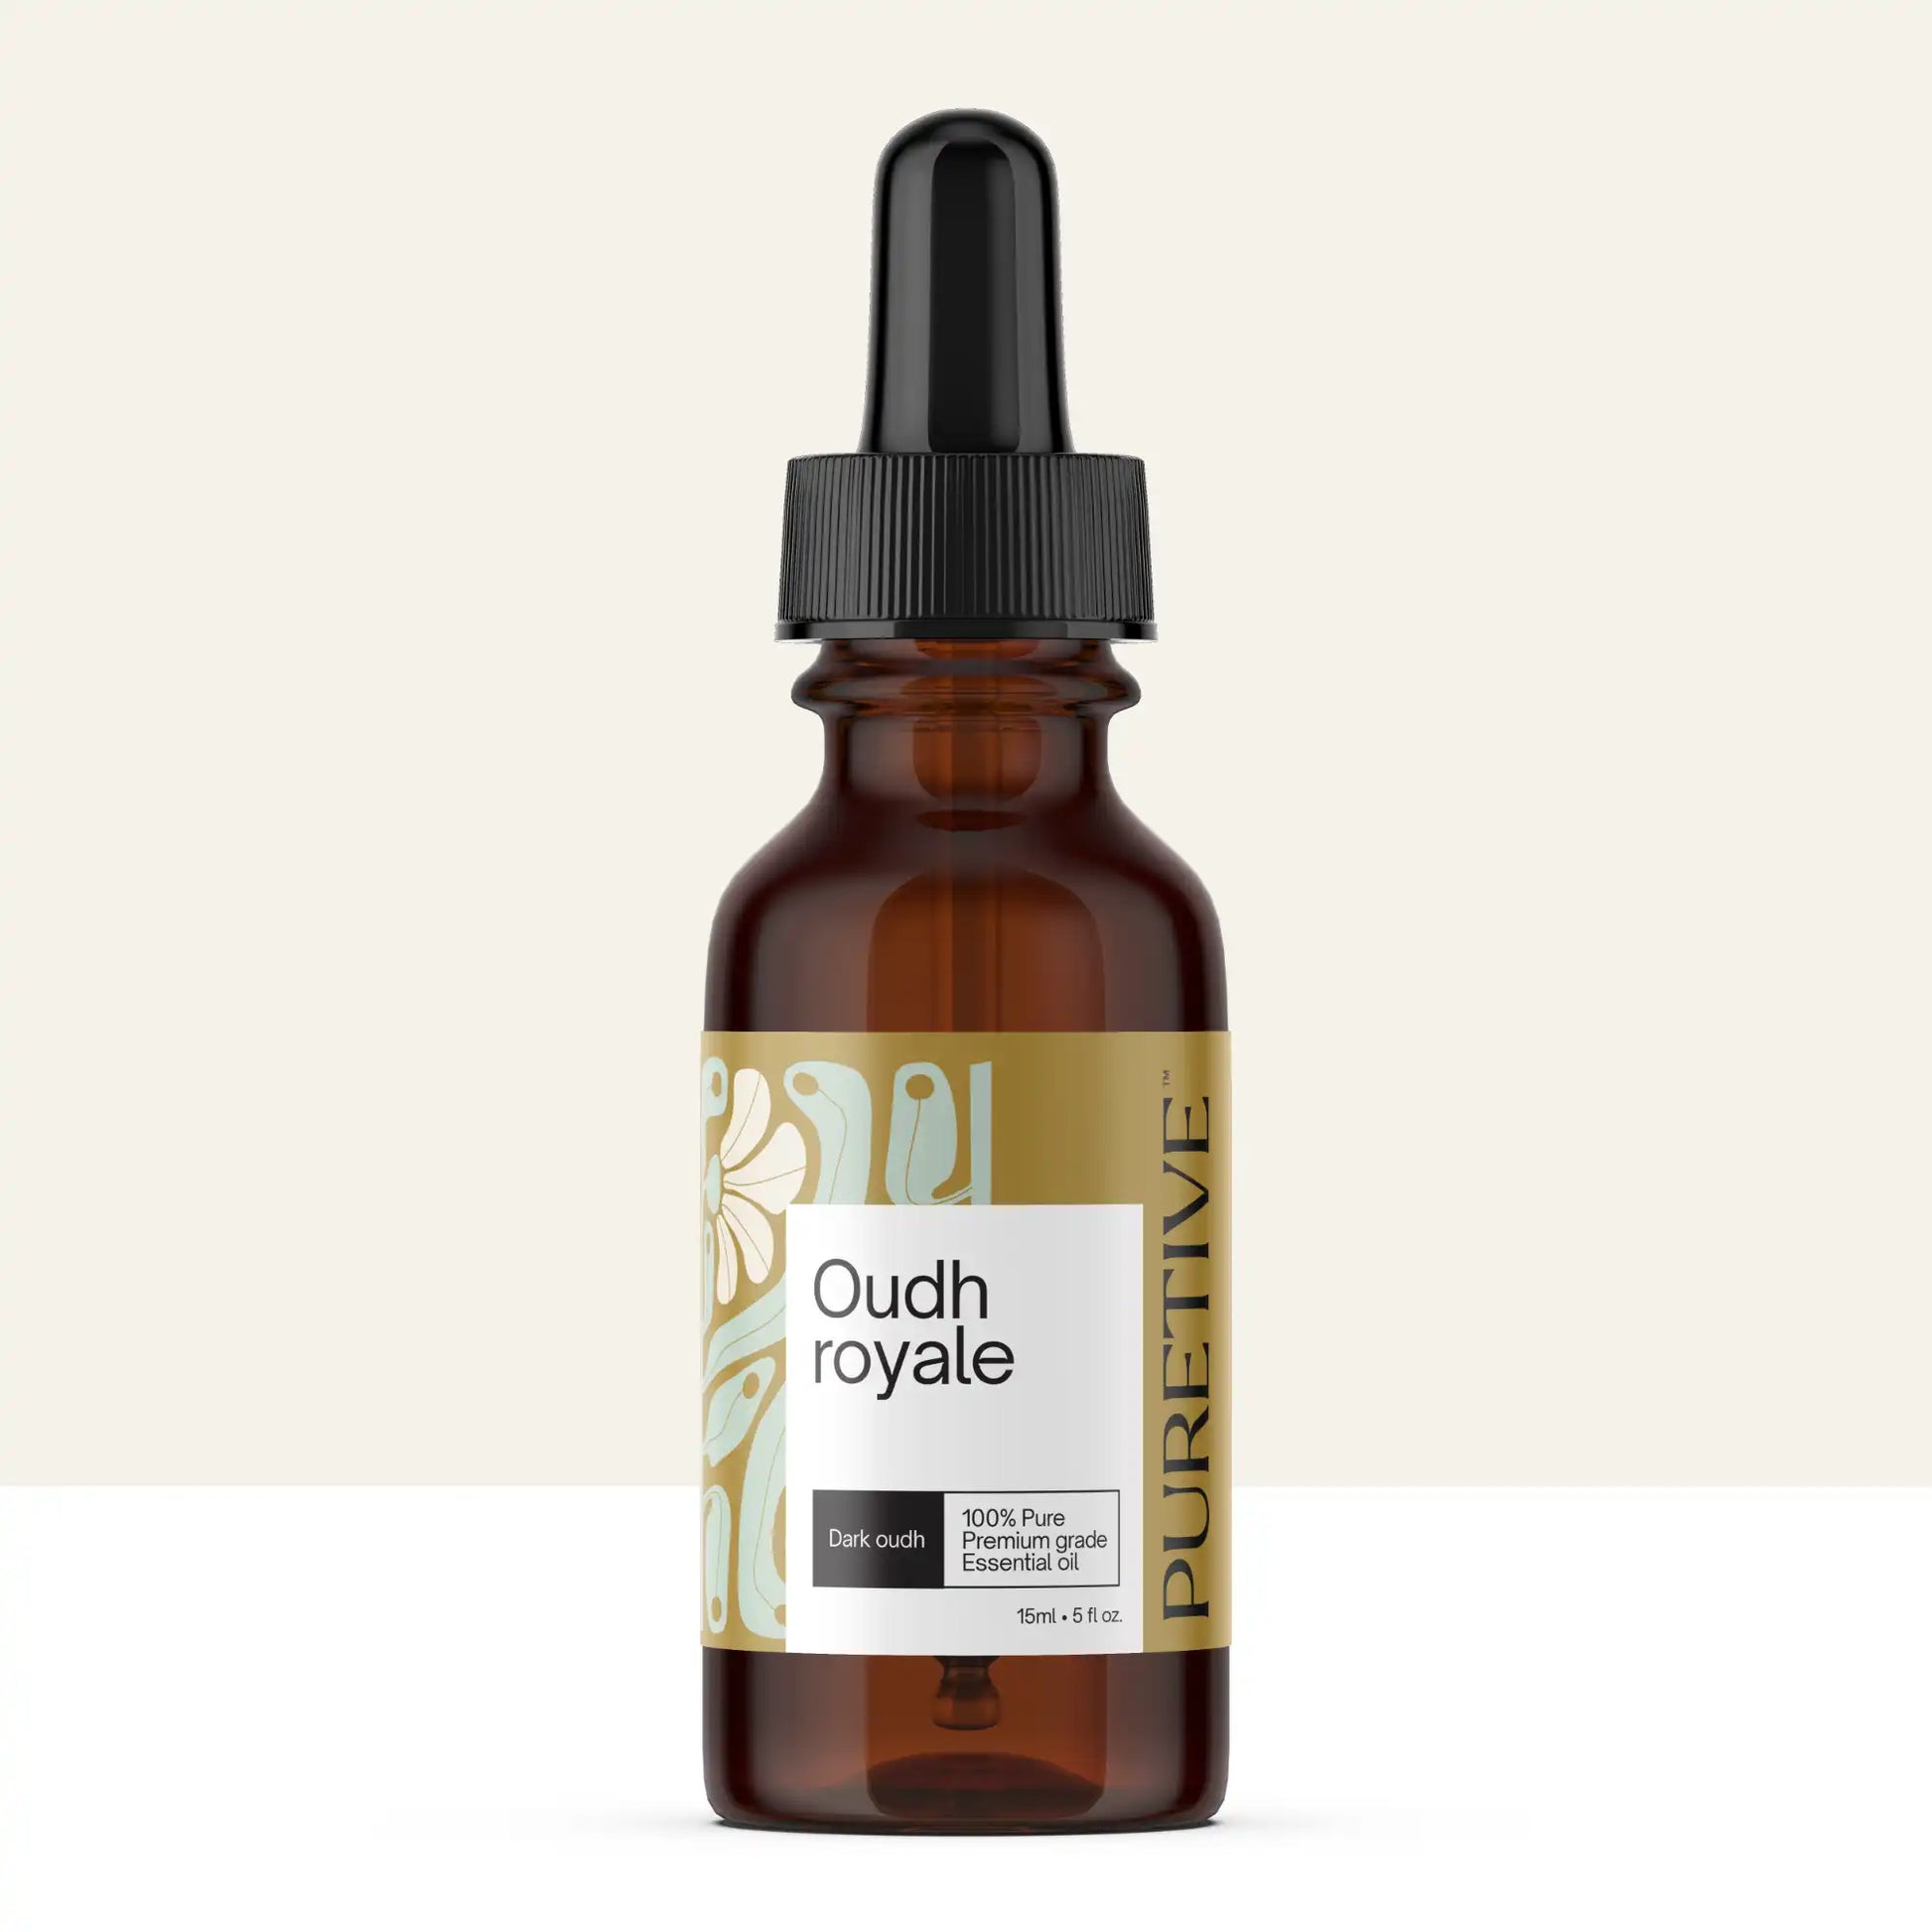 Oudh Royale - Dark Oud Essential Oil – Puretive Botanics